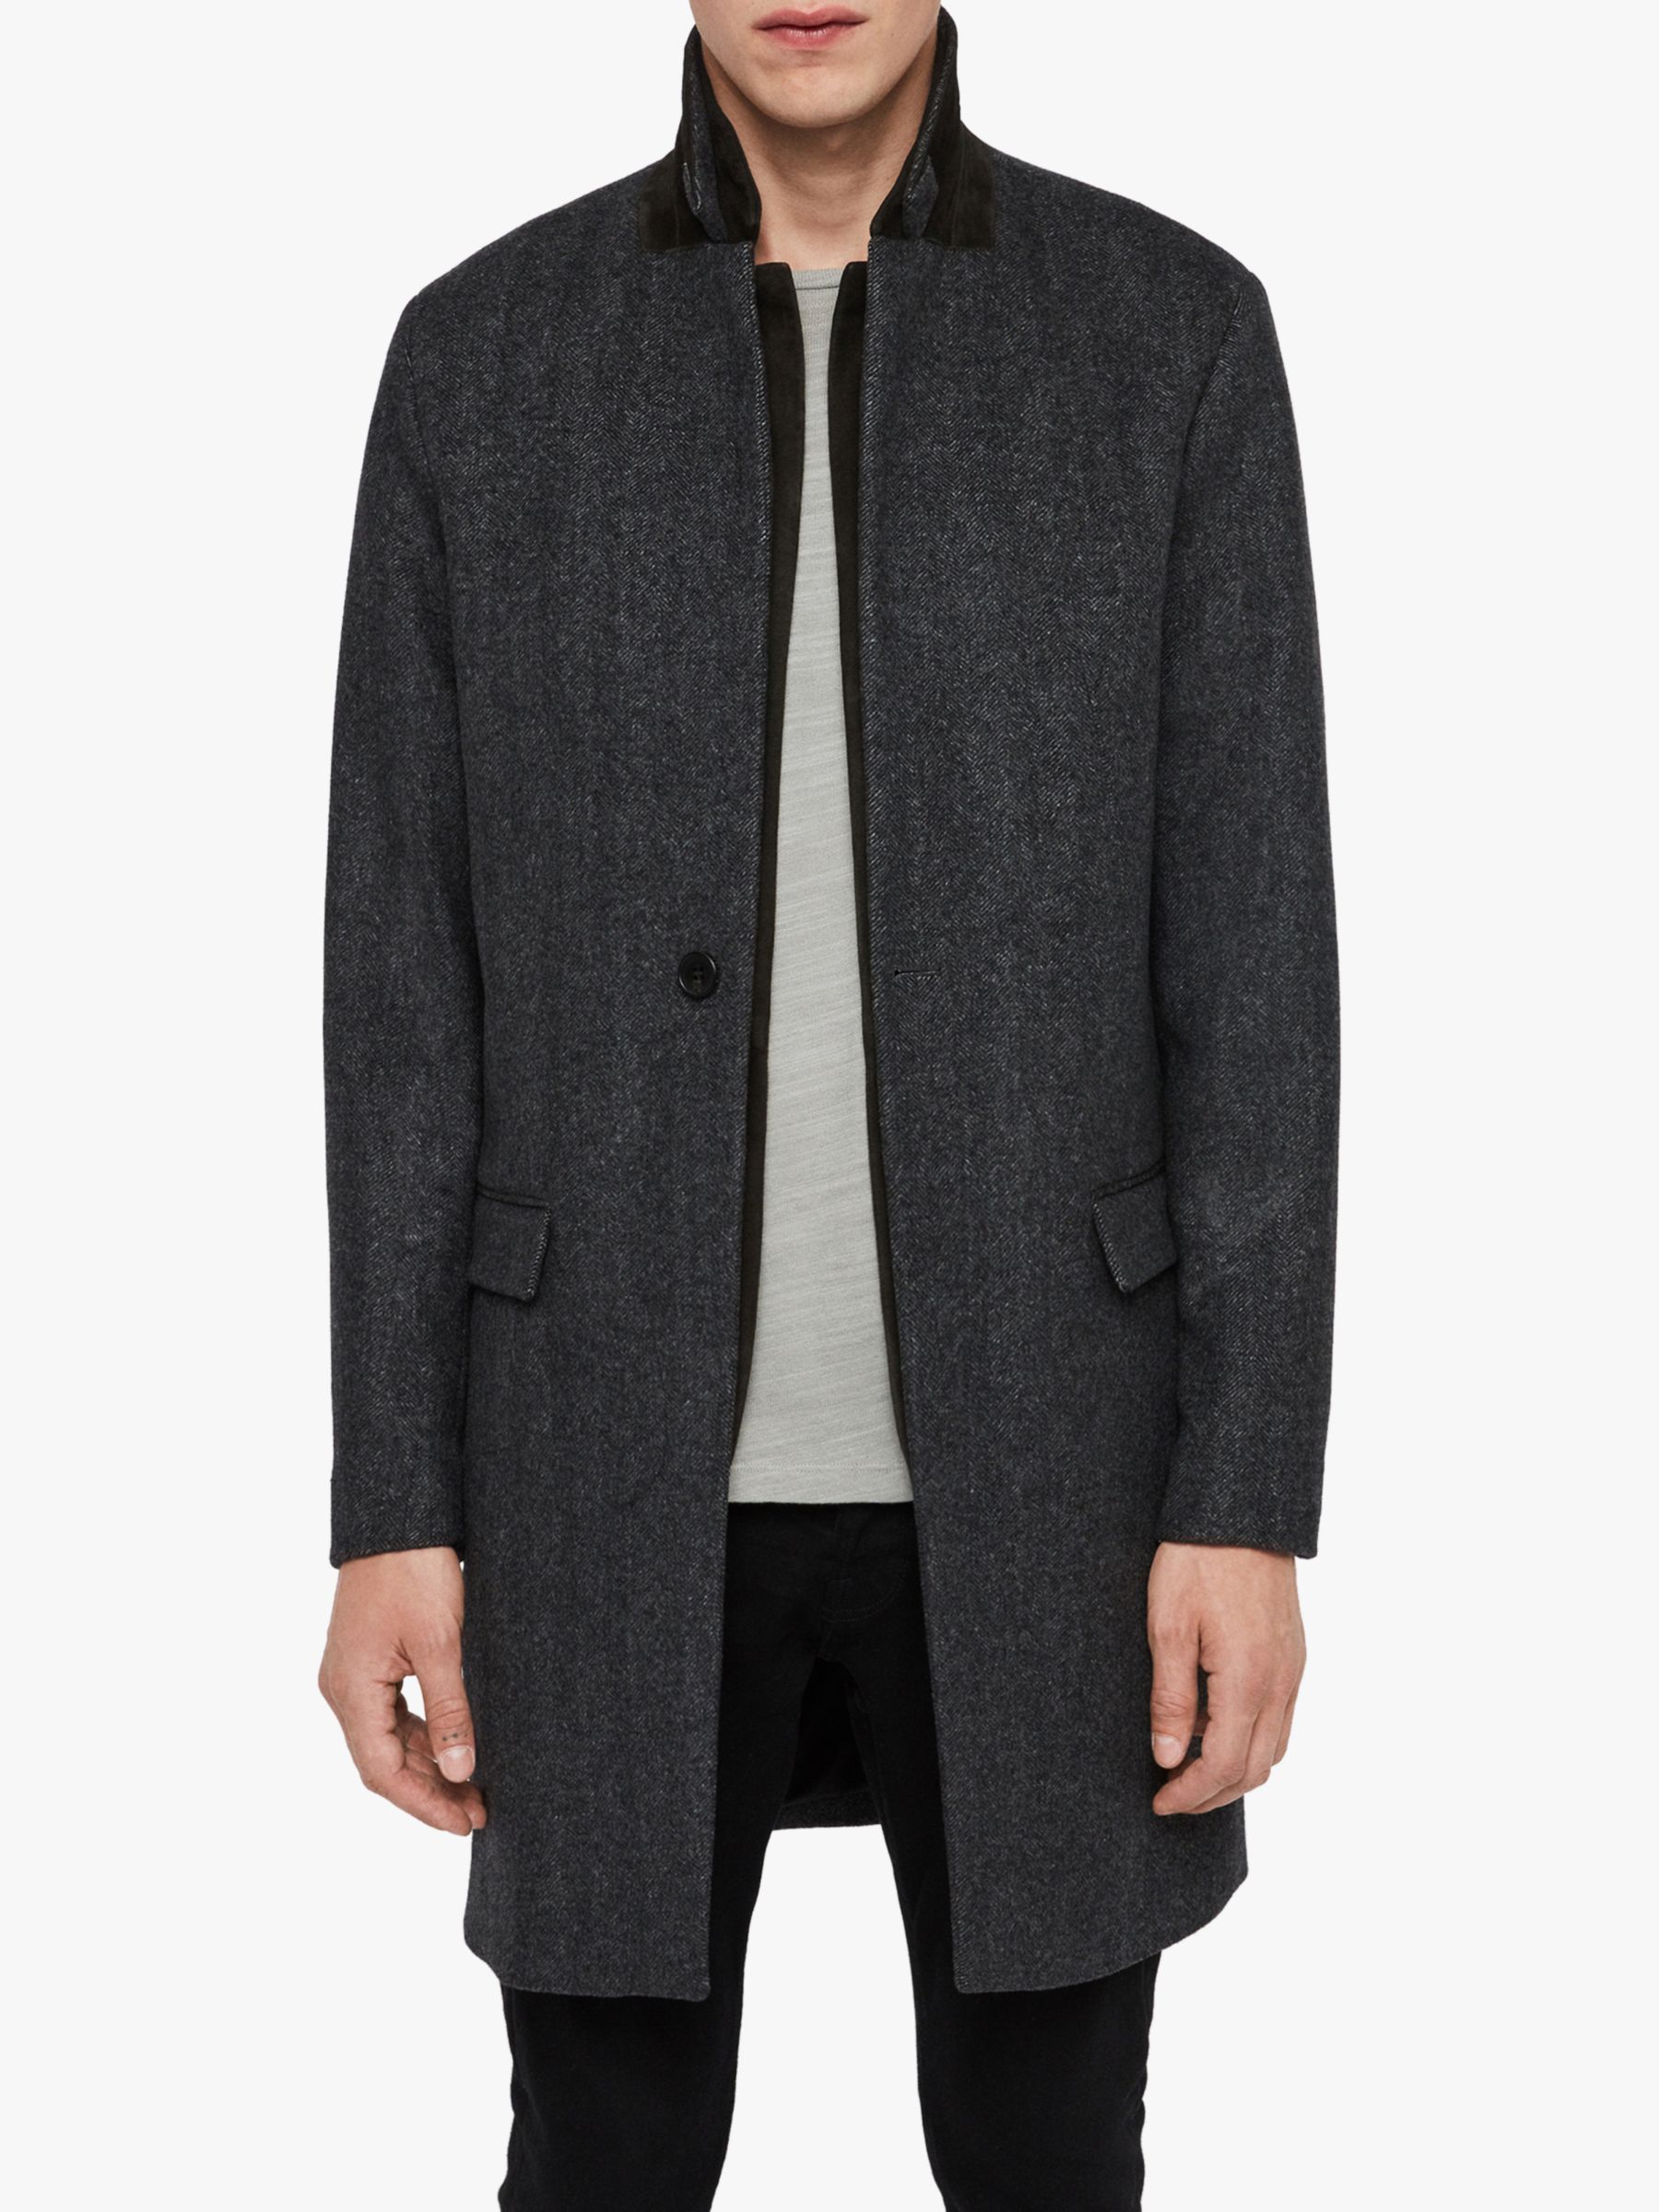 AllSaints Merton Coat, Grey